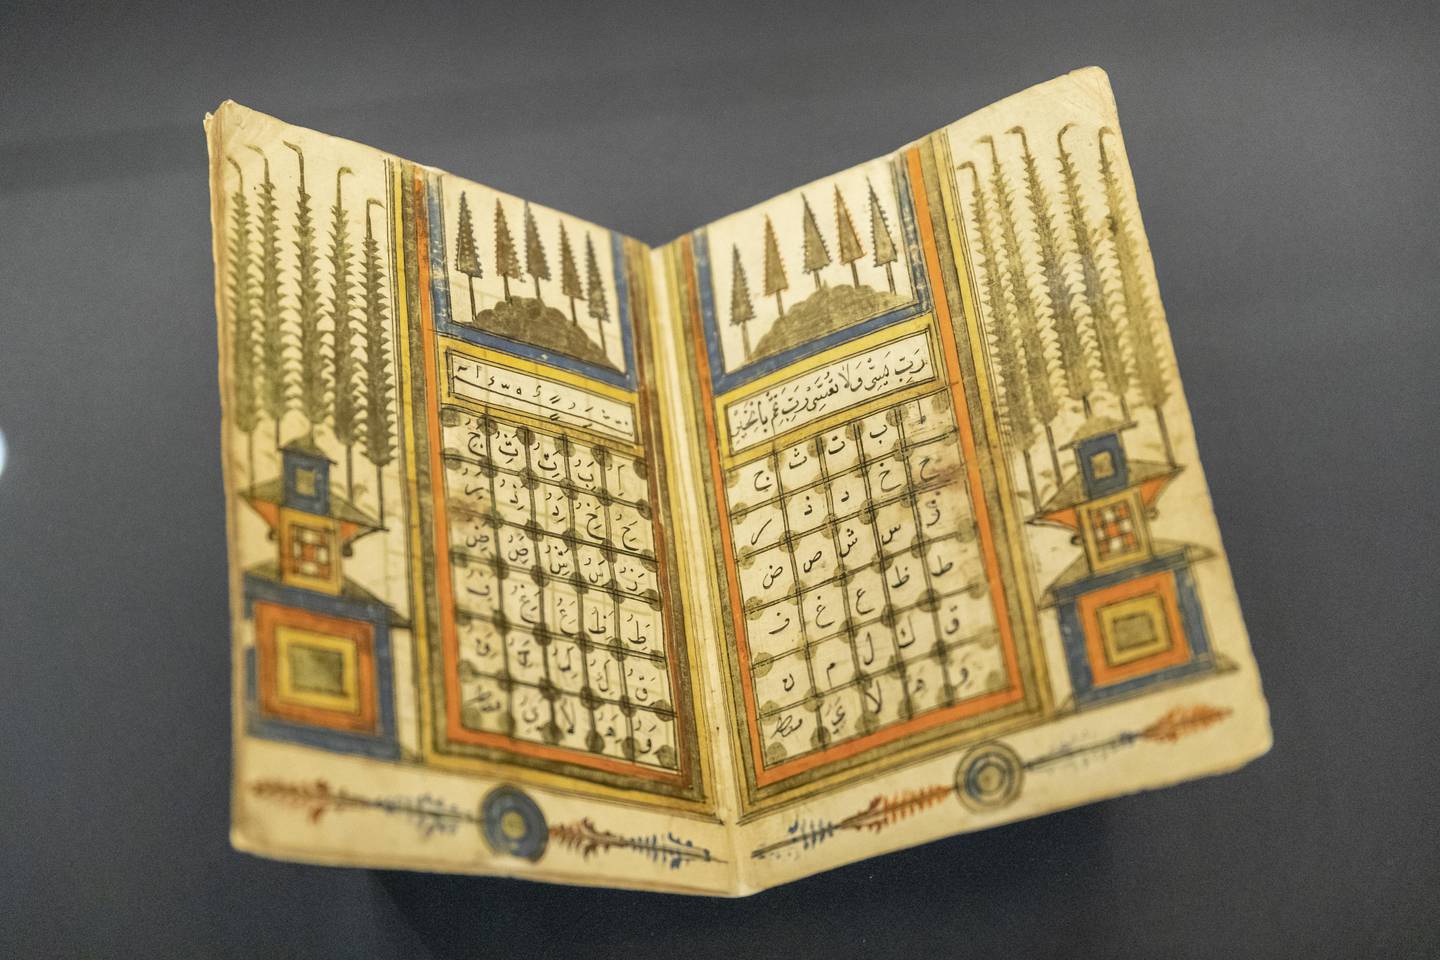 A 17th-century manuscript illustrating Arabic Alphabet at the Pearls of Wisdom exhibition at Qasr Al Watan. Antonie Robertson / The National

